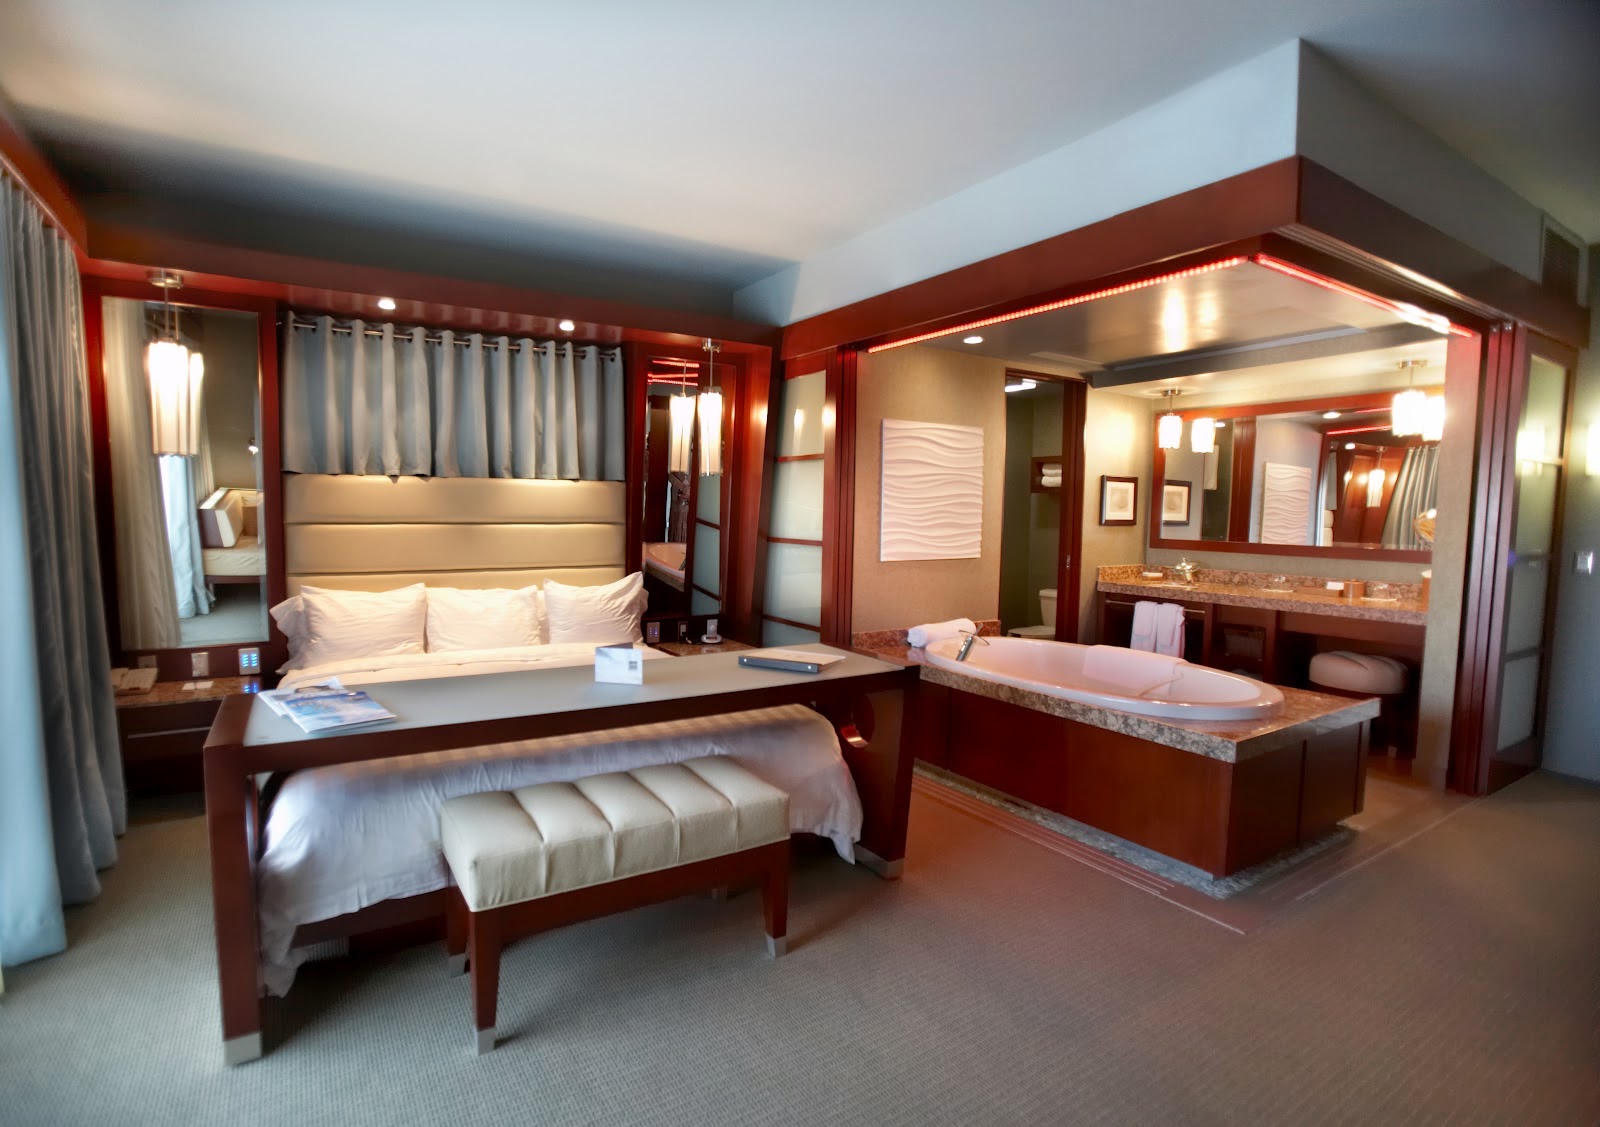 Luxury Bedroom Ideas 2015 Hd ~ Besthdwallpapers2 